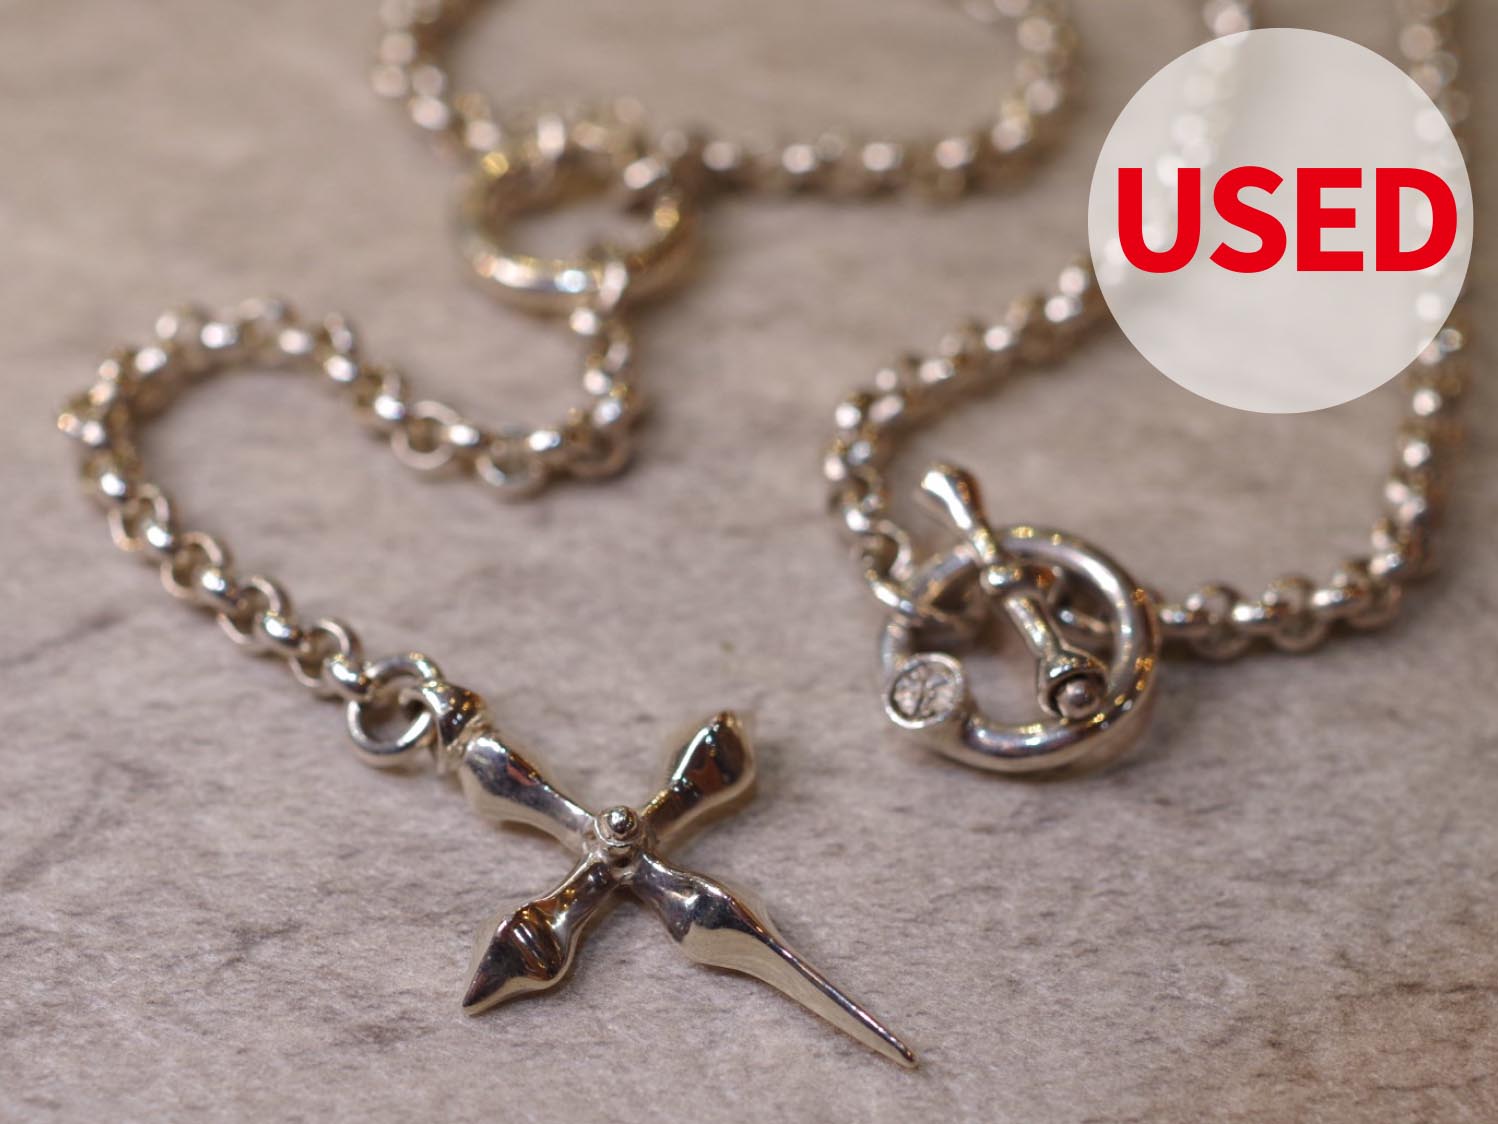 【Used】デフブリード ロザリオネックレス deaf breed Custom rosary necklace SILVER925 ネックレス メンズ レディース